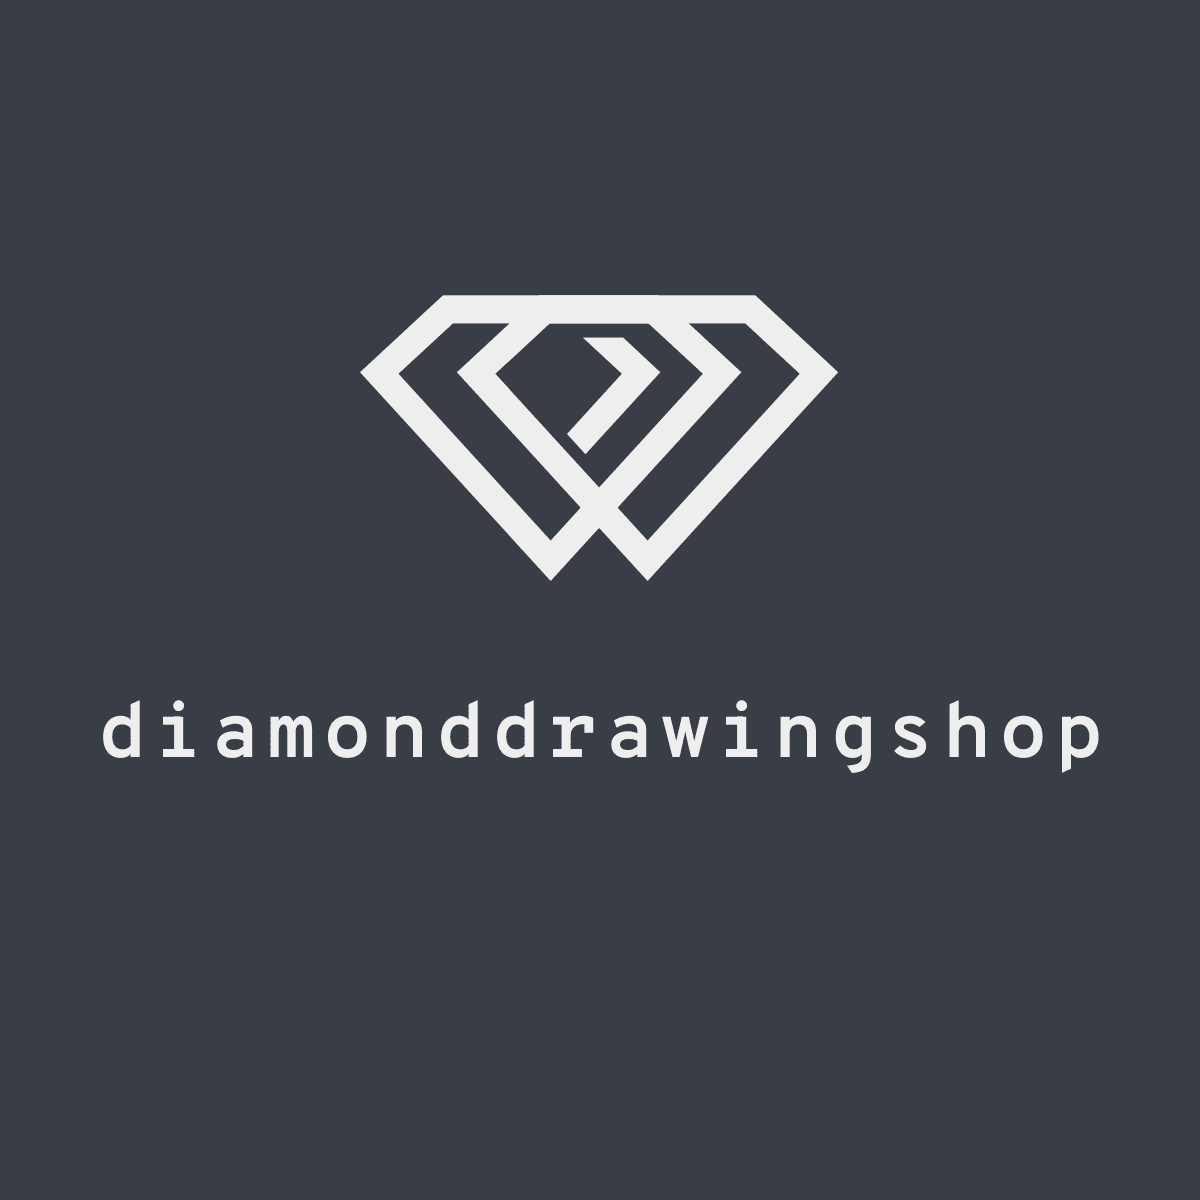 DiamondDrawingShop